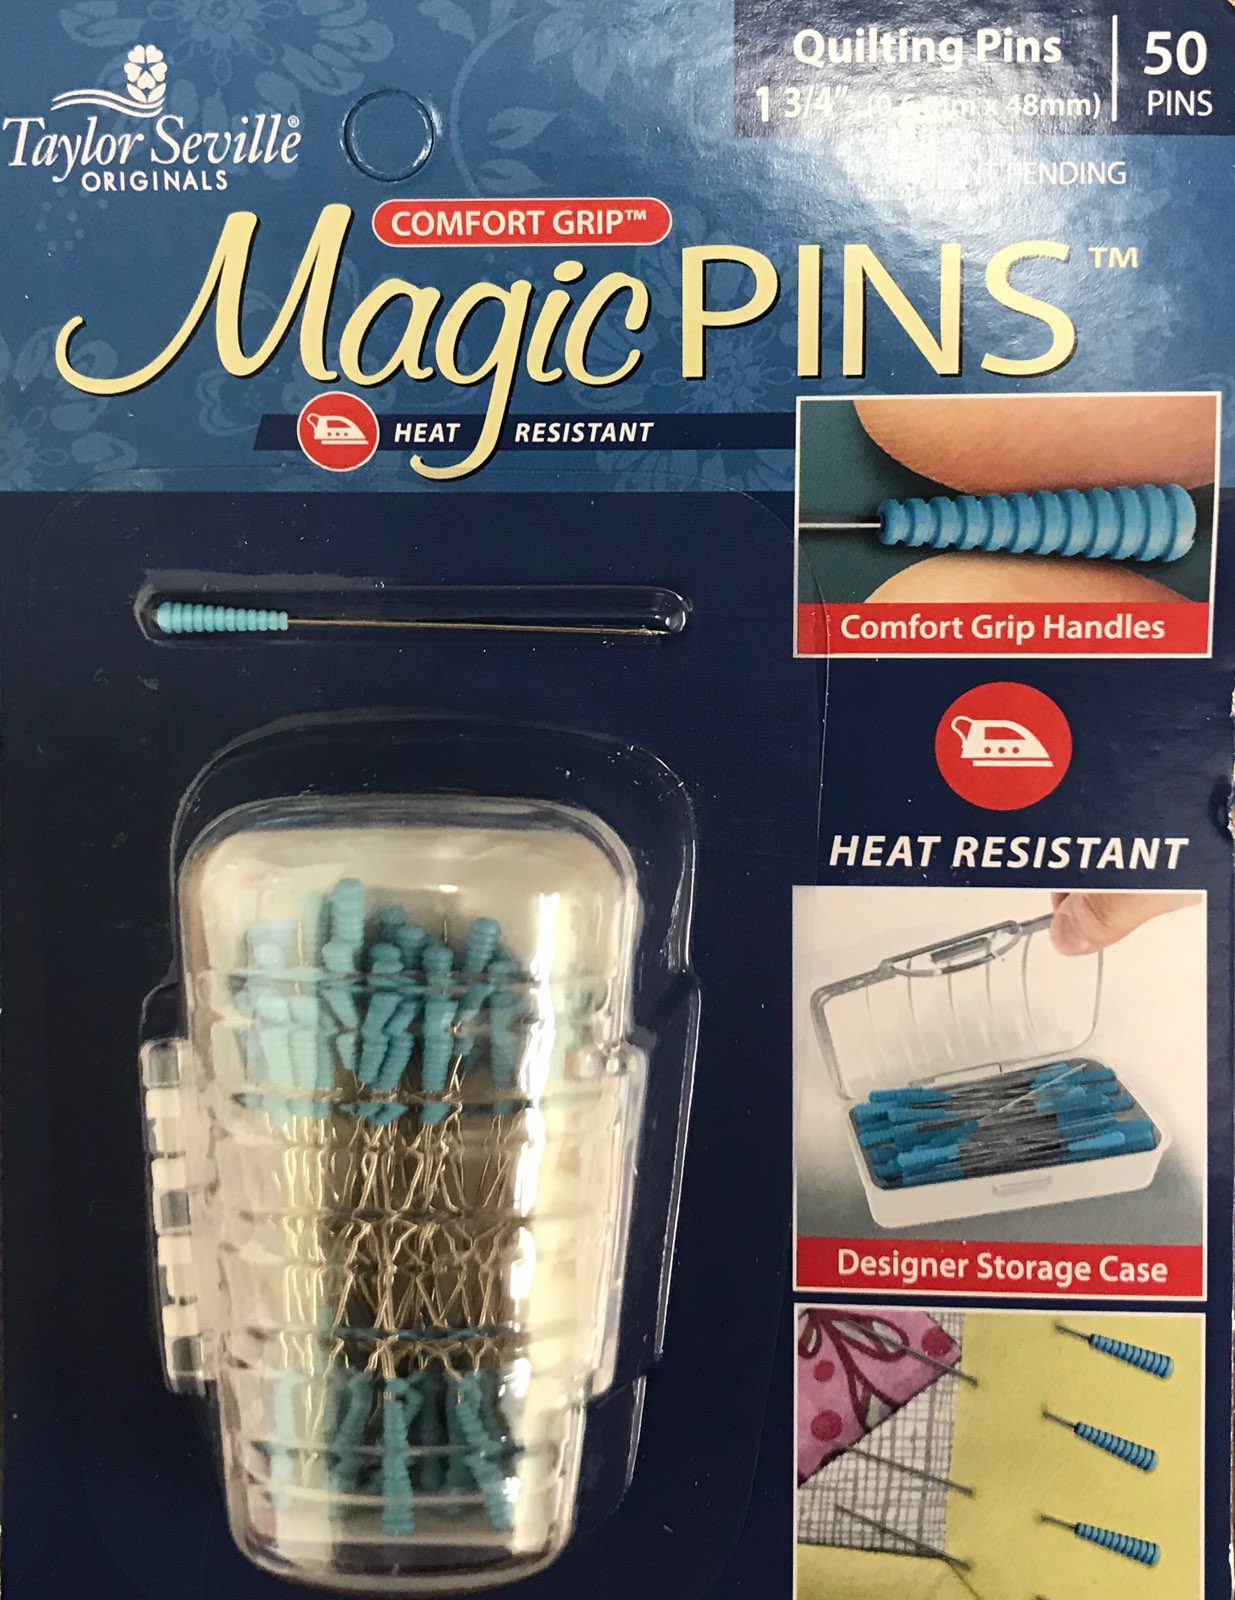 Taylor Seville - Magic Pins - Comfort Grip Quilting Pins 1 3/4" 50 Pins